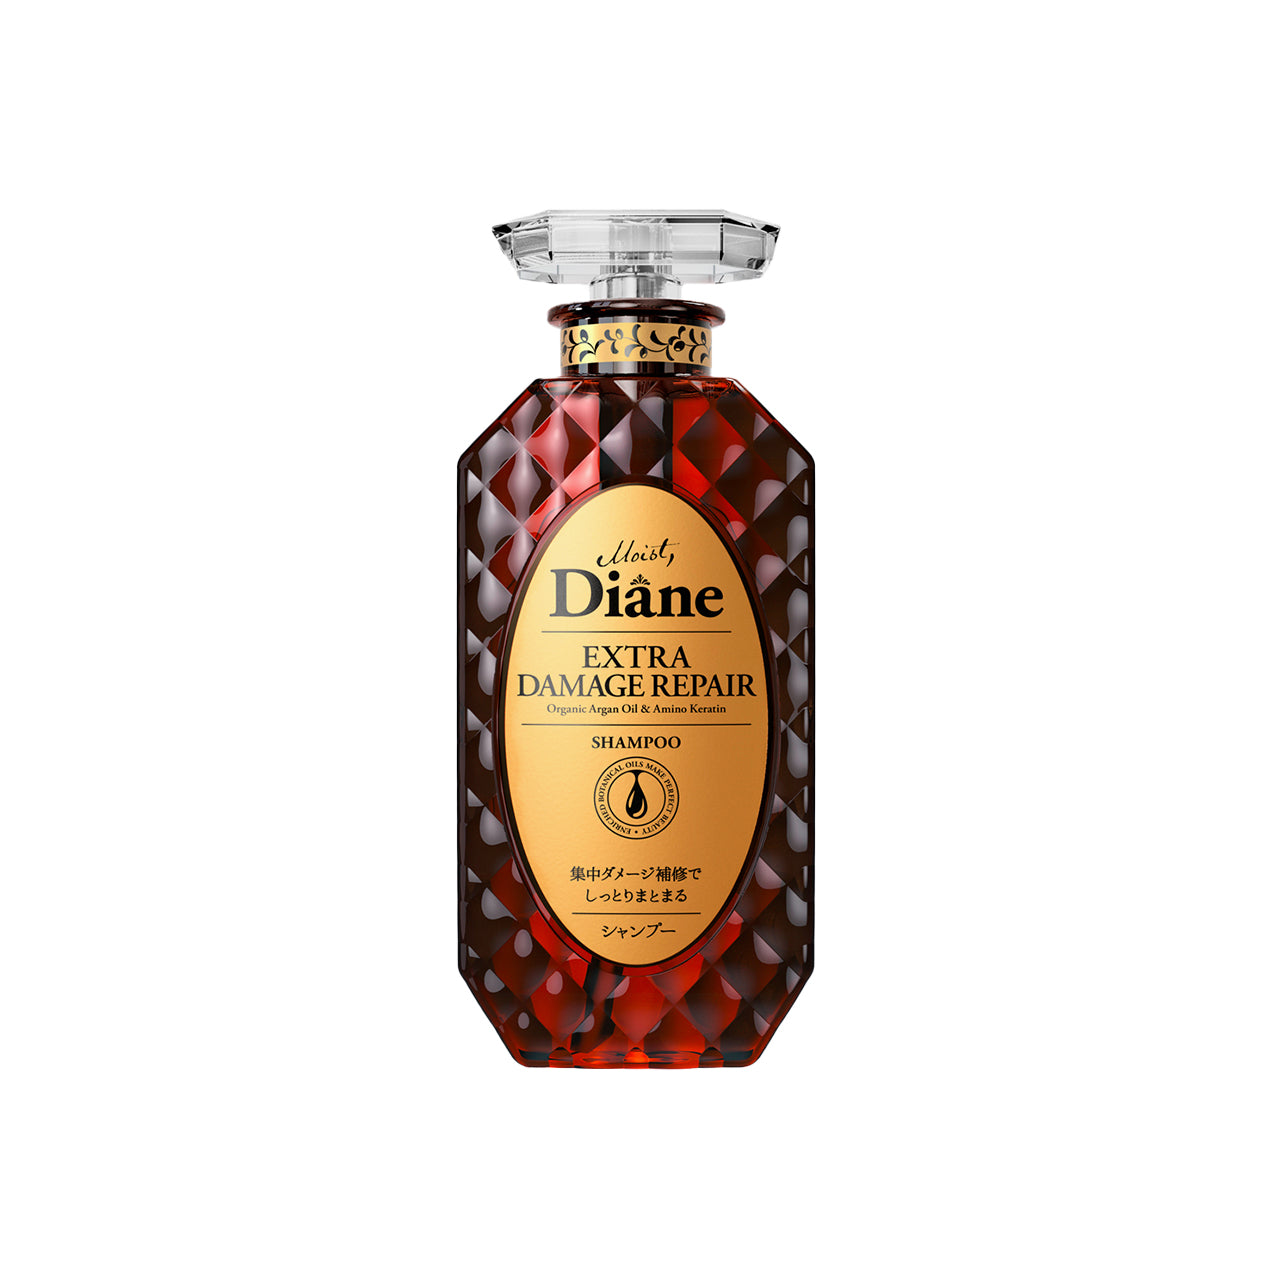 Moist Diane Extra Damage Repair Shampoo Beauty Moist Diane   